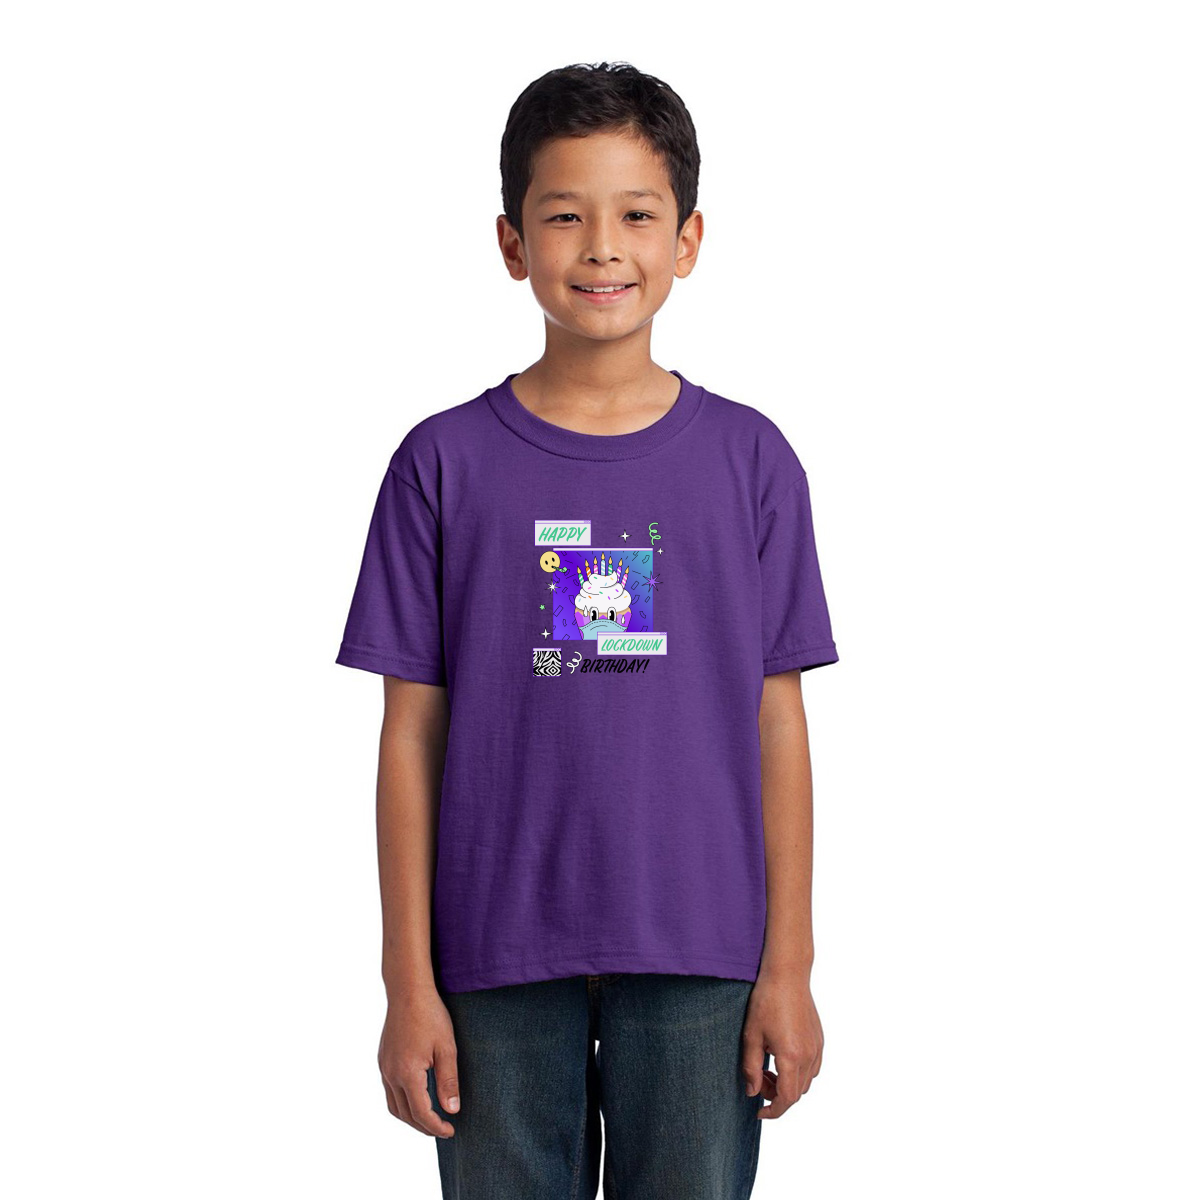 Happy Lock-down Birthday Toddler T-shirt | Purple